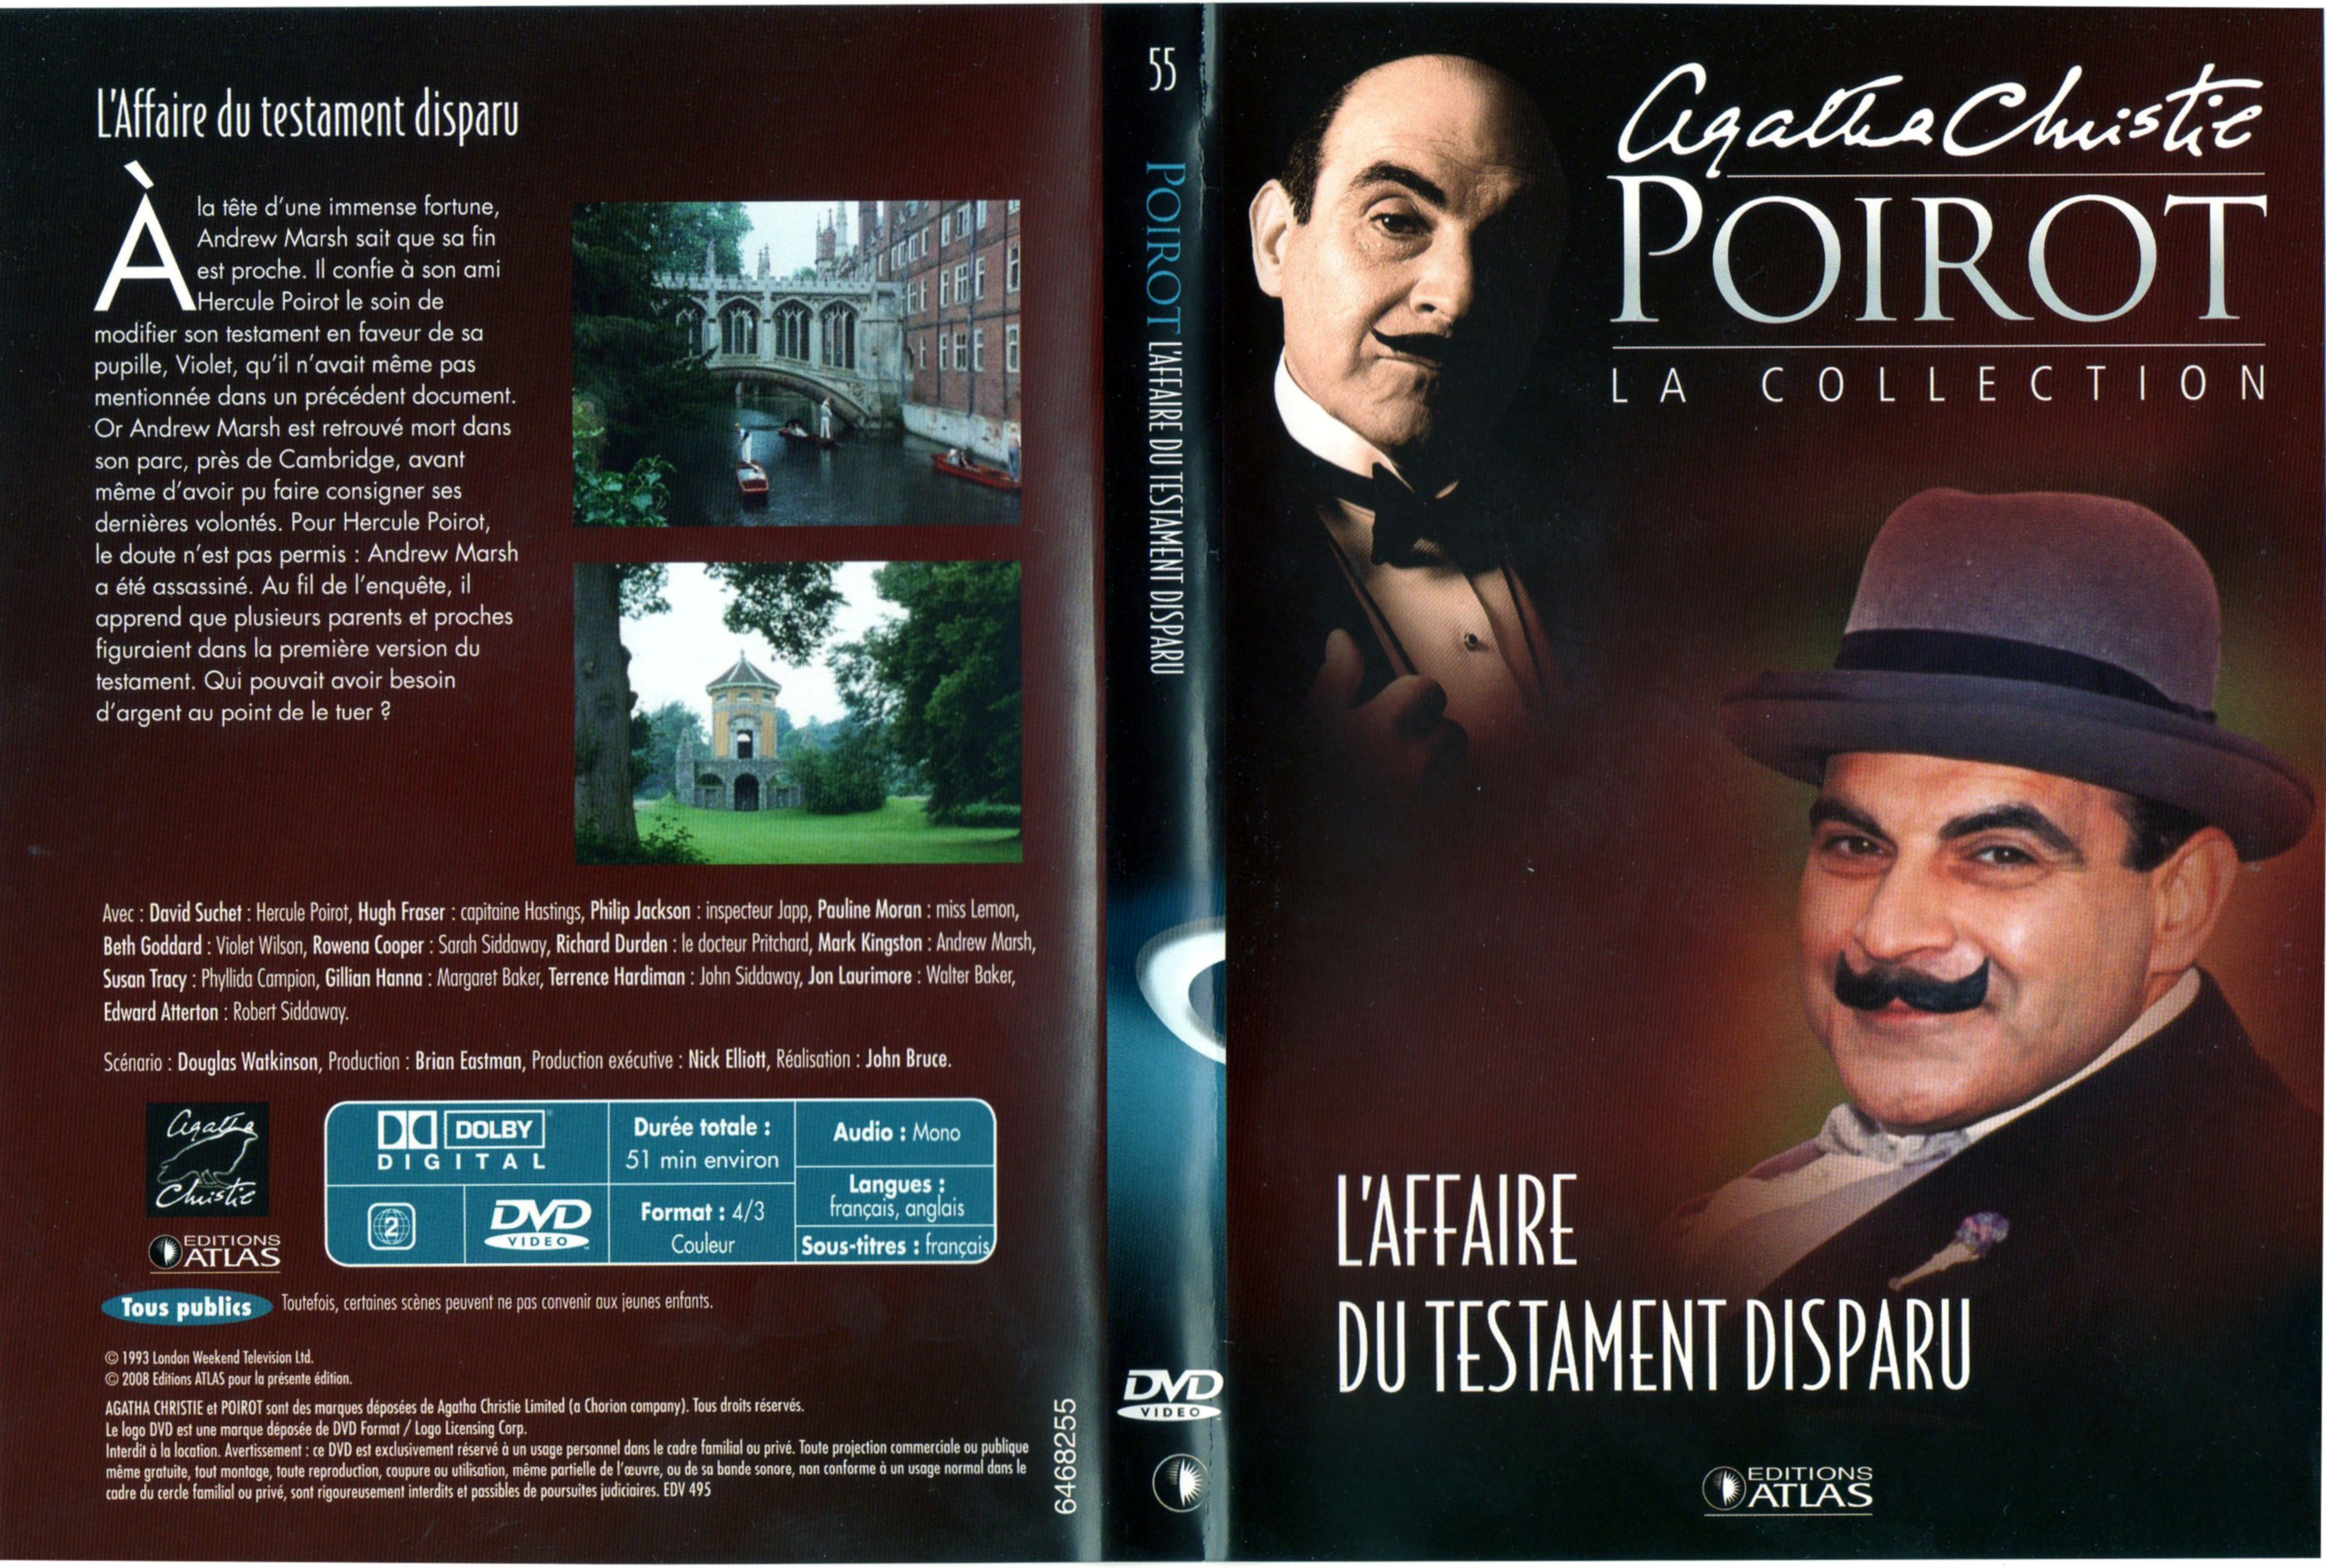 Jaquette DVD Hercule Poirot vol 55